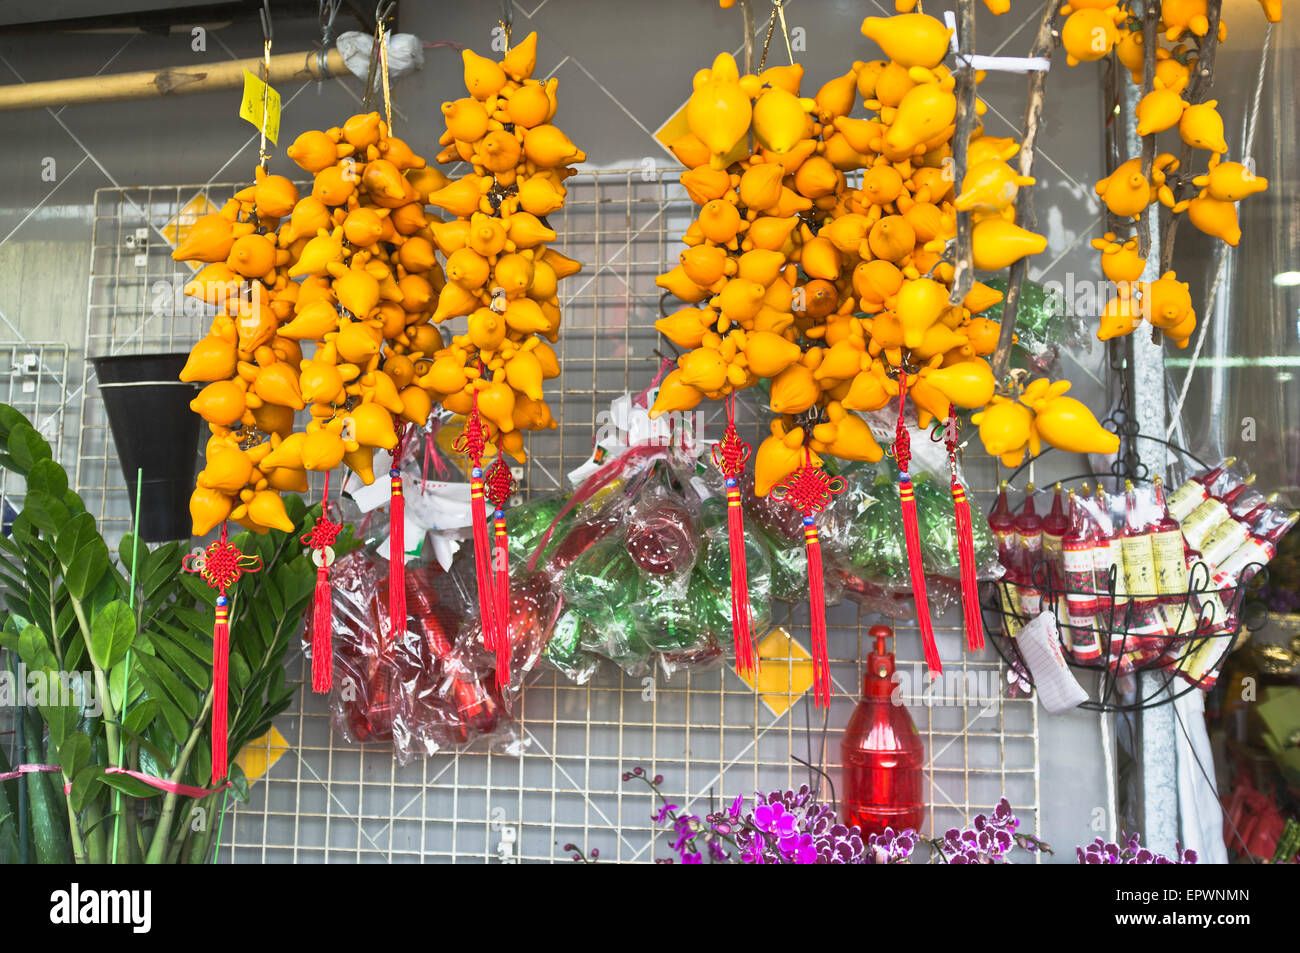 dh Flower Market MONG KOK HONG KONG Chinese New Year decoration Gold fruit orange decorations Stock Photo